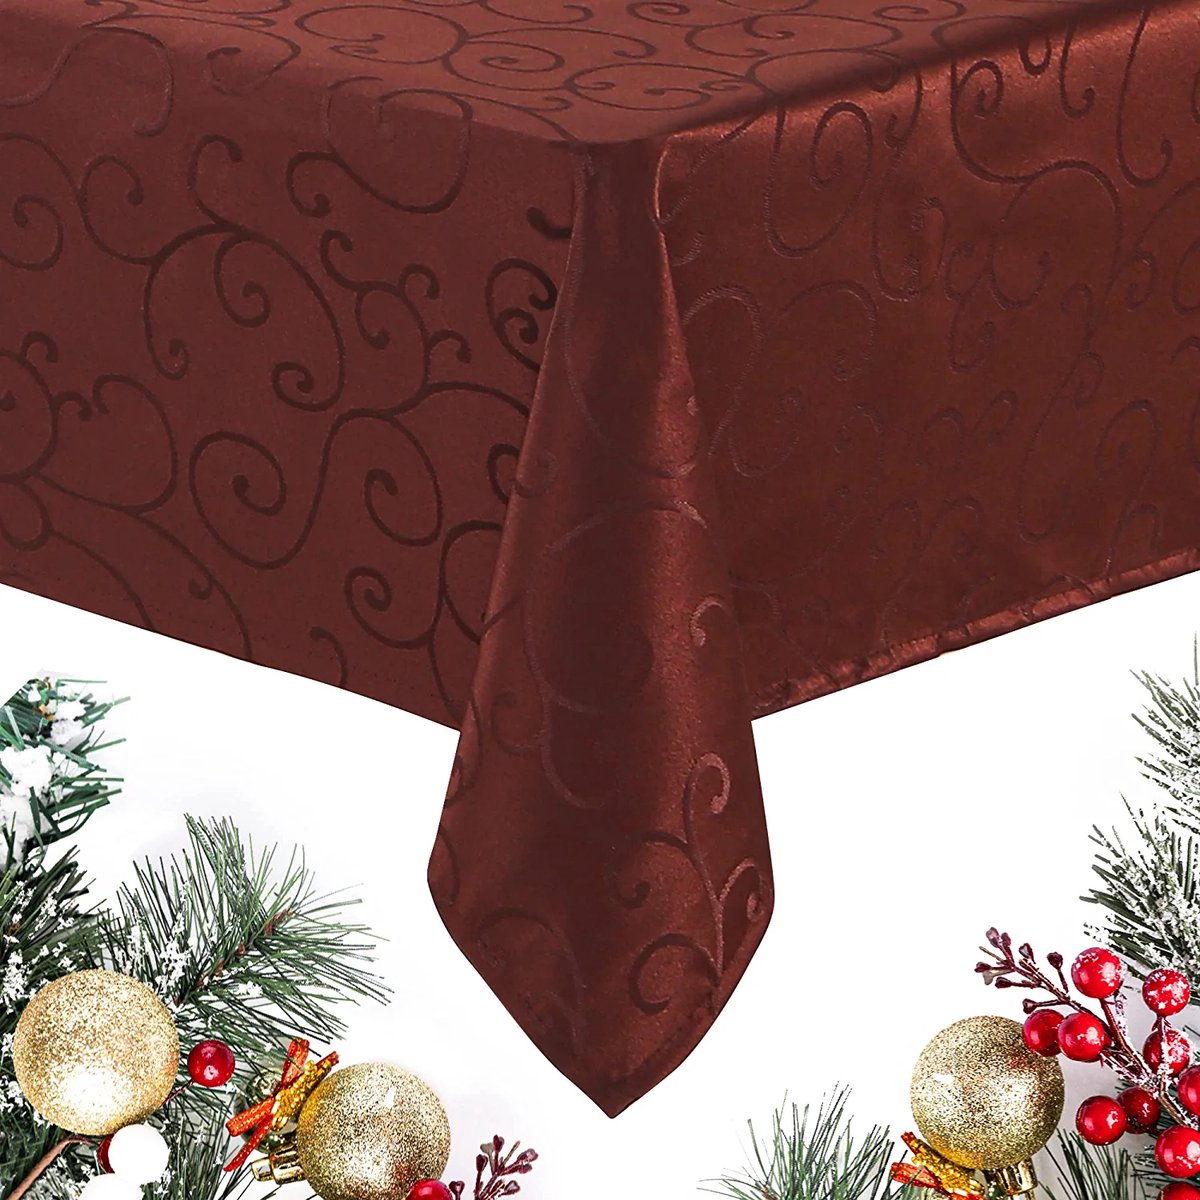 Lecwoll tafelkleed damast ornamenten tafelkleden jacquard waterafstotend wasbaar en strijkvrij vierkant 140x200 cm bruin